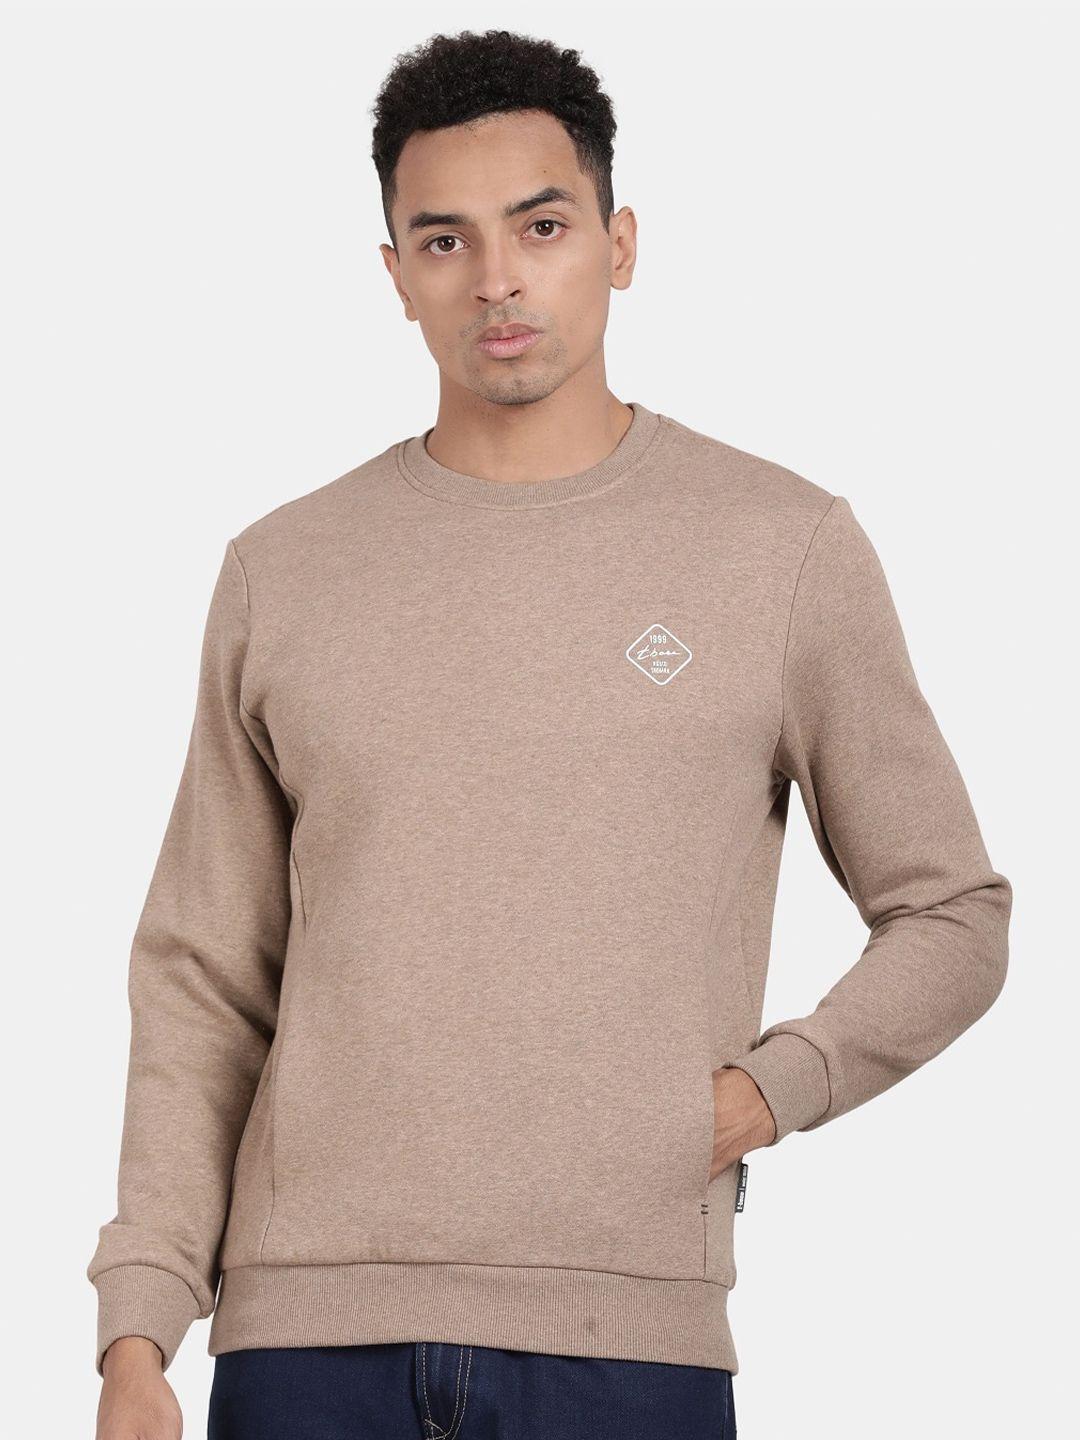 t-base-round-neck-long-sleeves-ribbed-cotton-sweatshirt